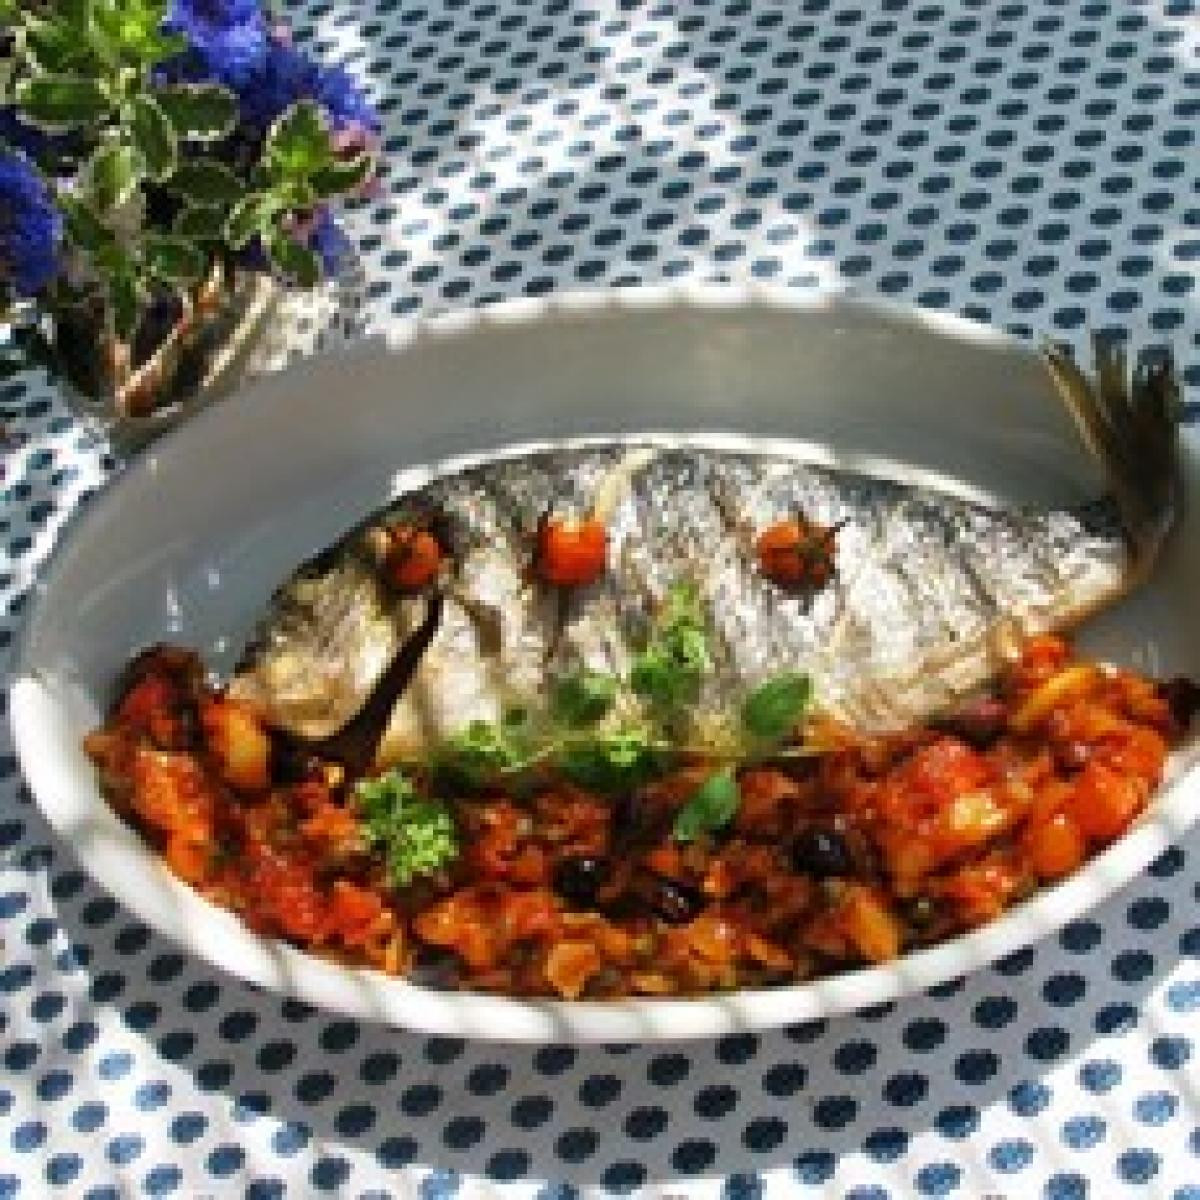 Bream Fish Recipes
 Sea Bream with Mediterranean Sauce Recipes